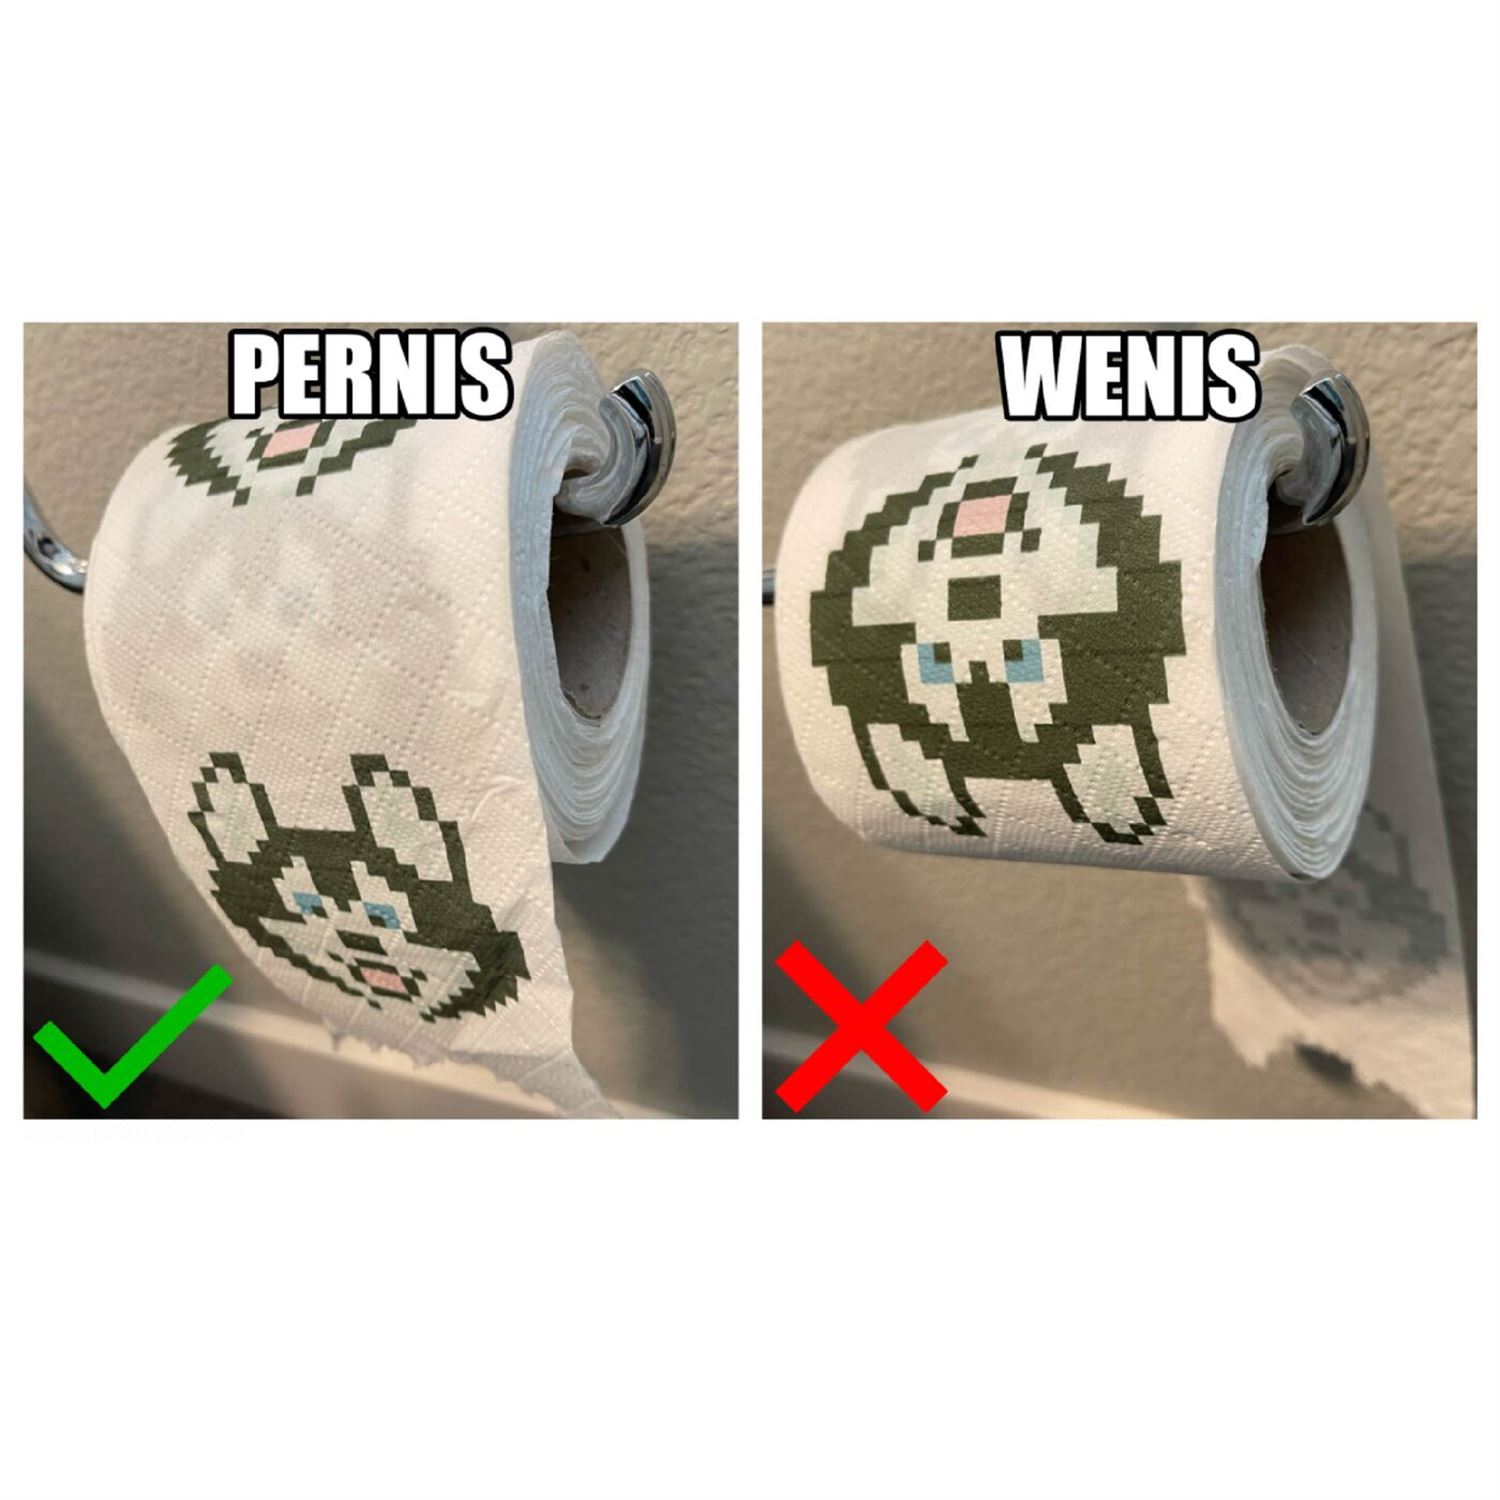 Wenis vs Pernis